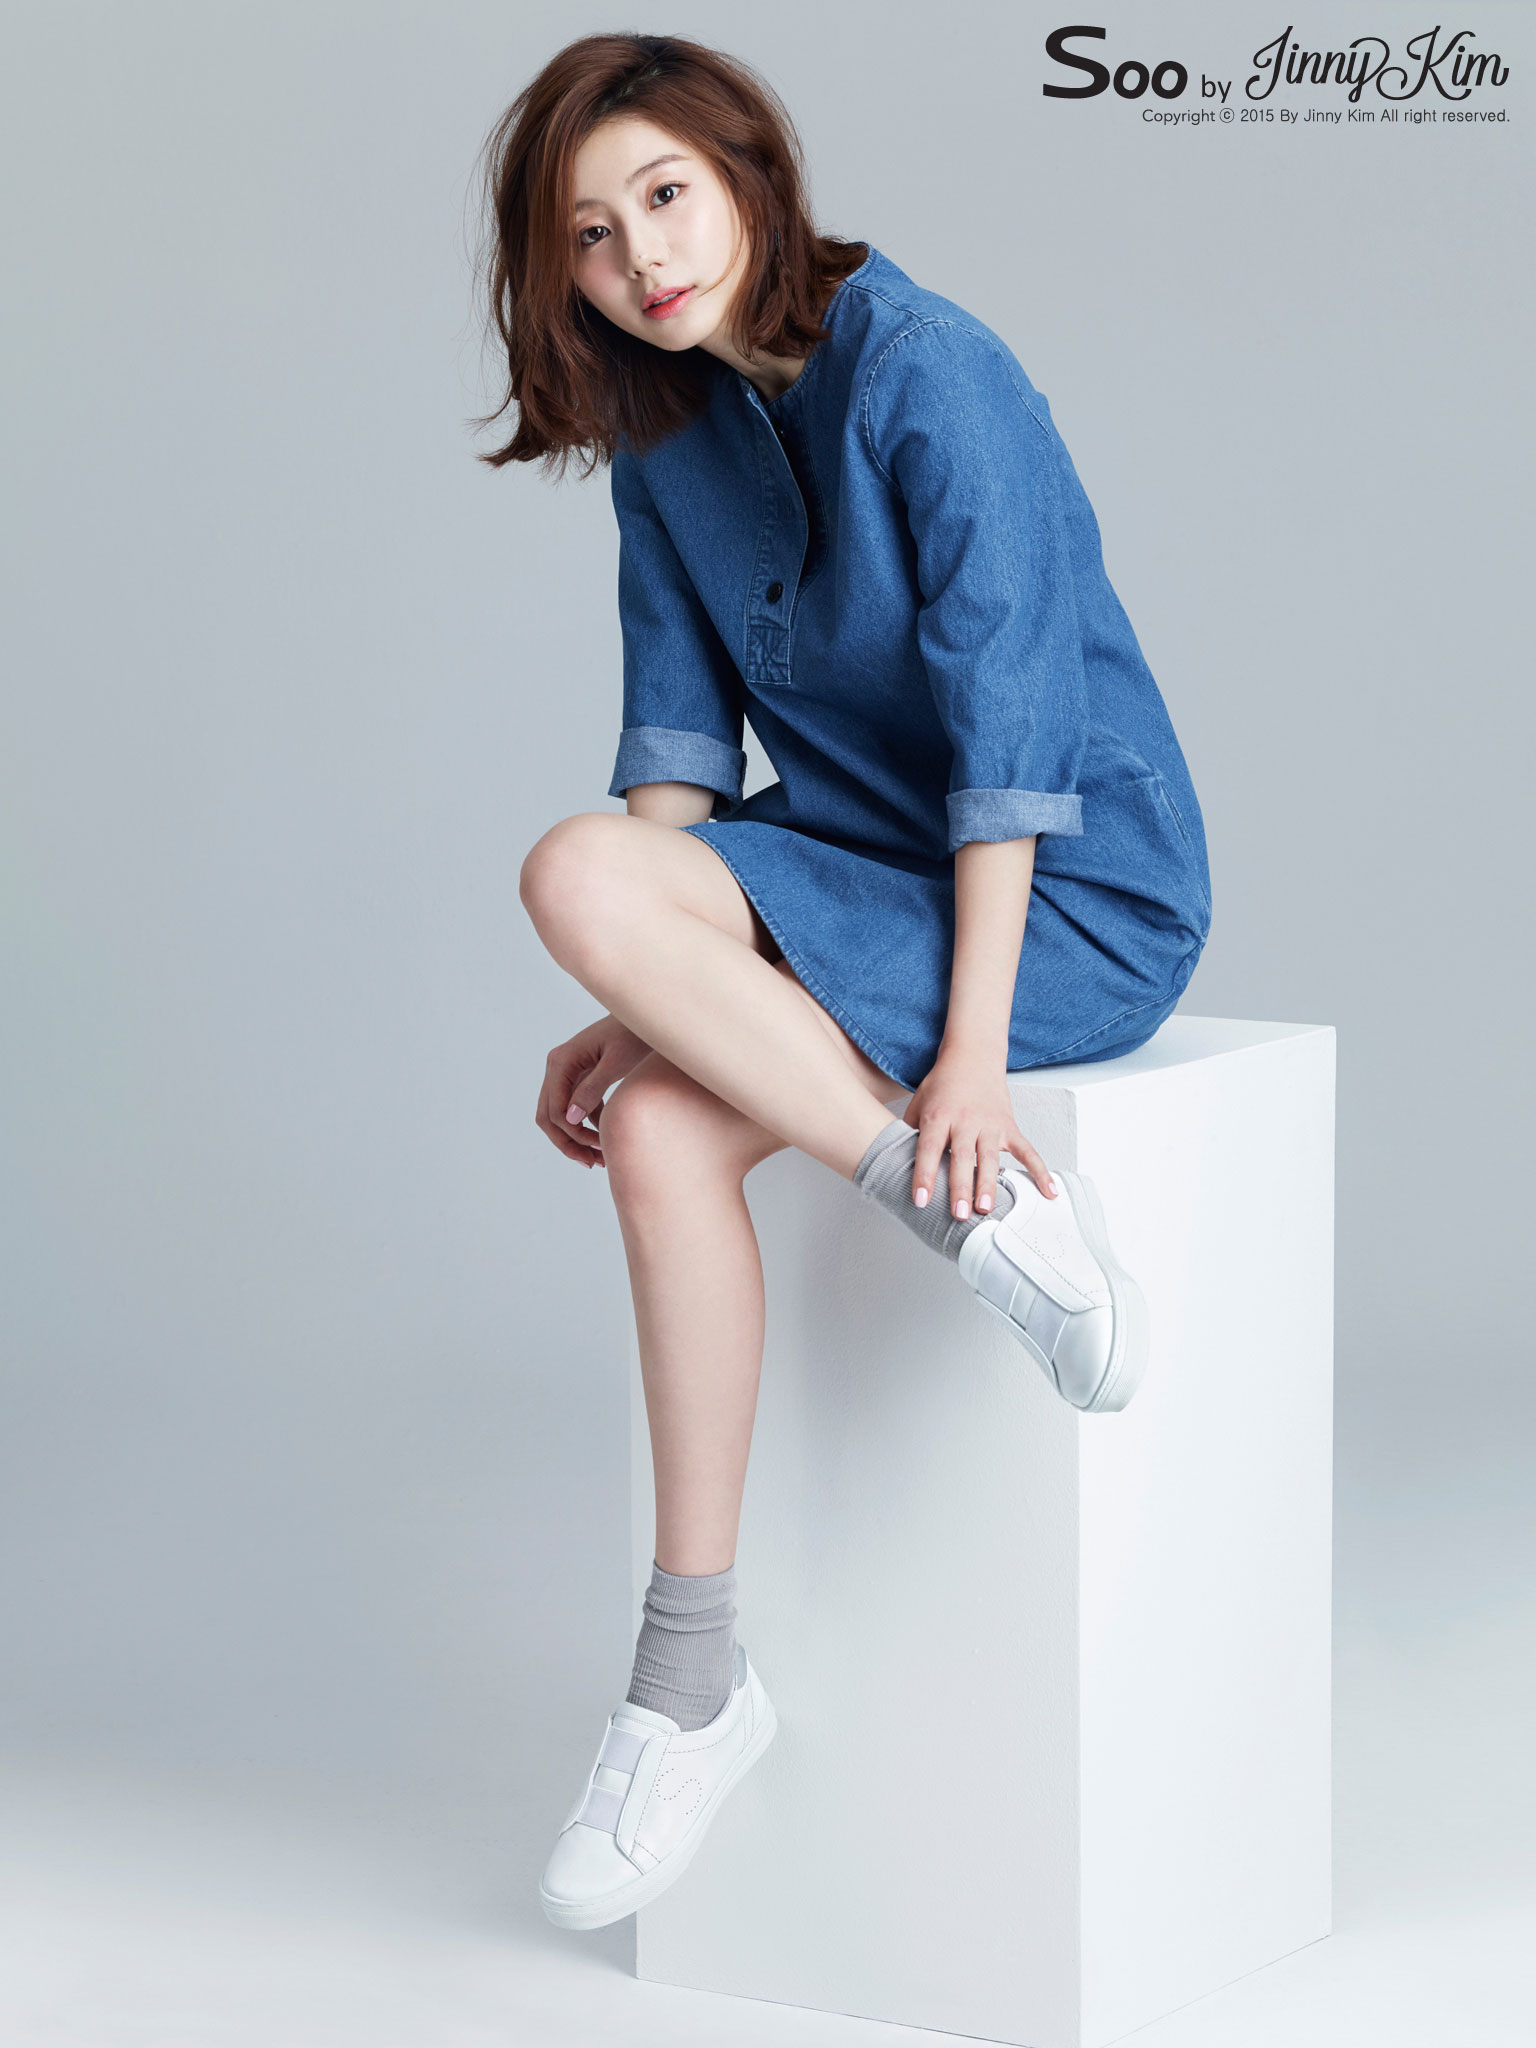 Soo by Jinny Kim designer shoe label